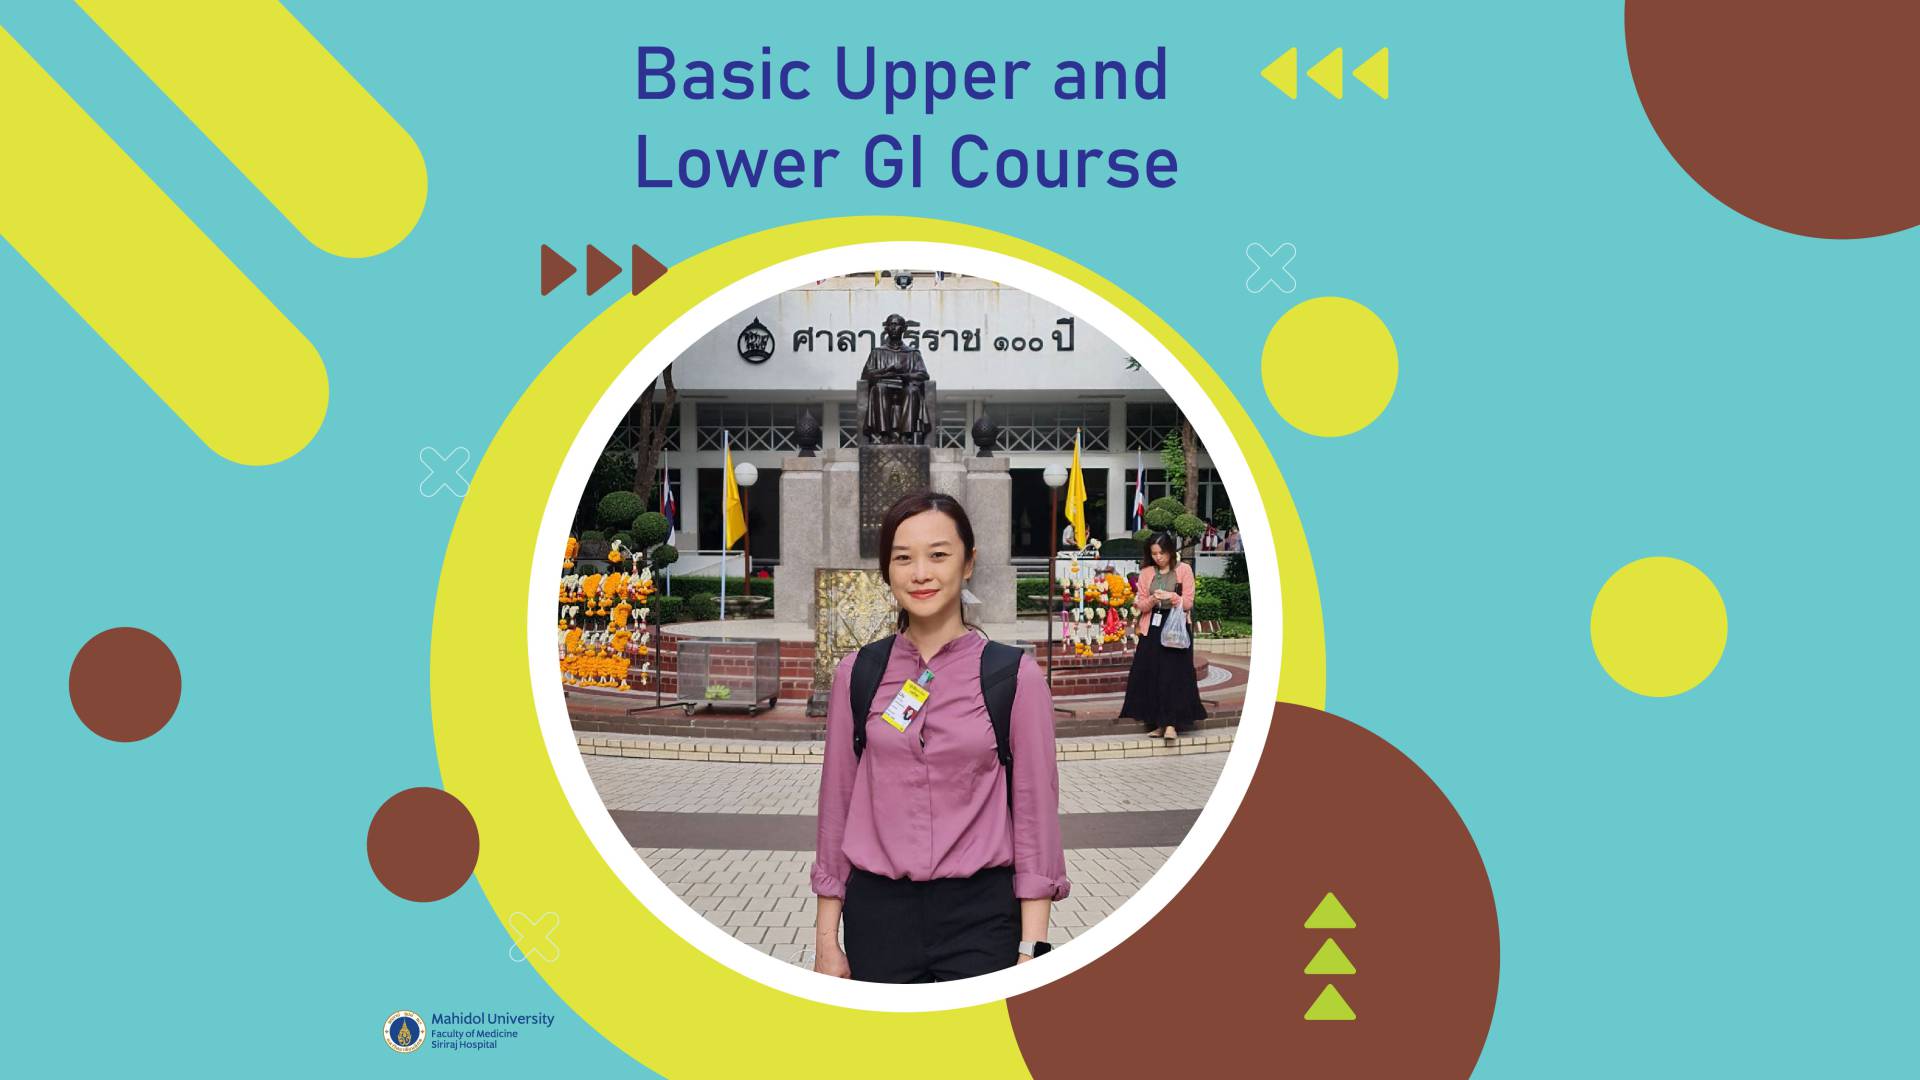 Basic Upper and Lower GI Course at Siriraj